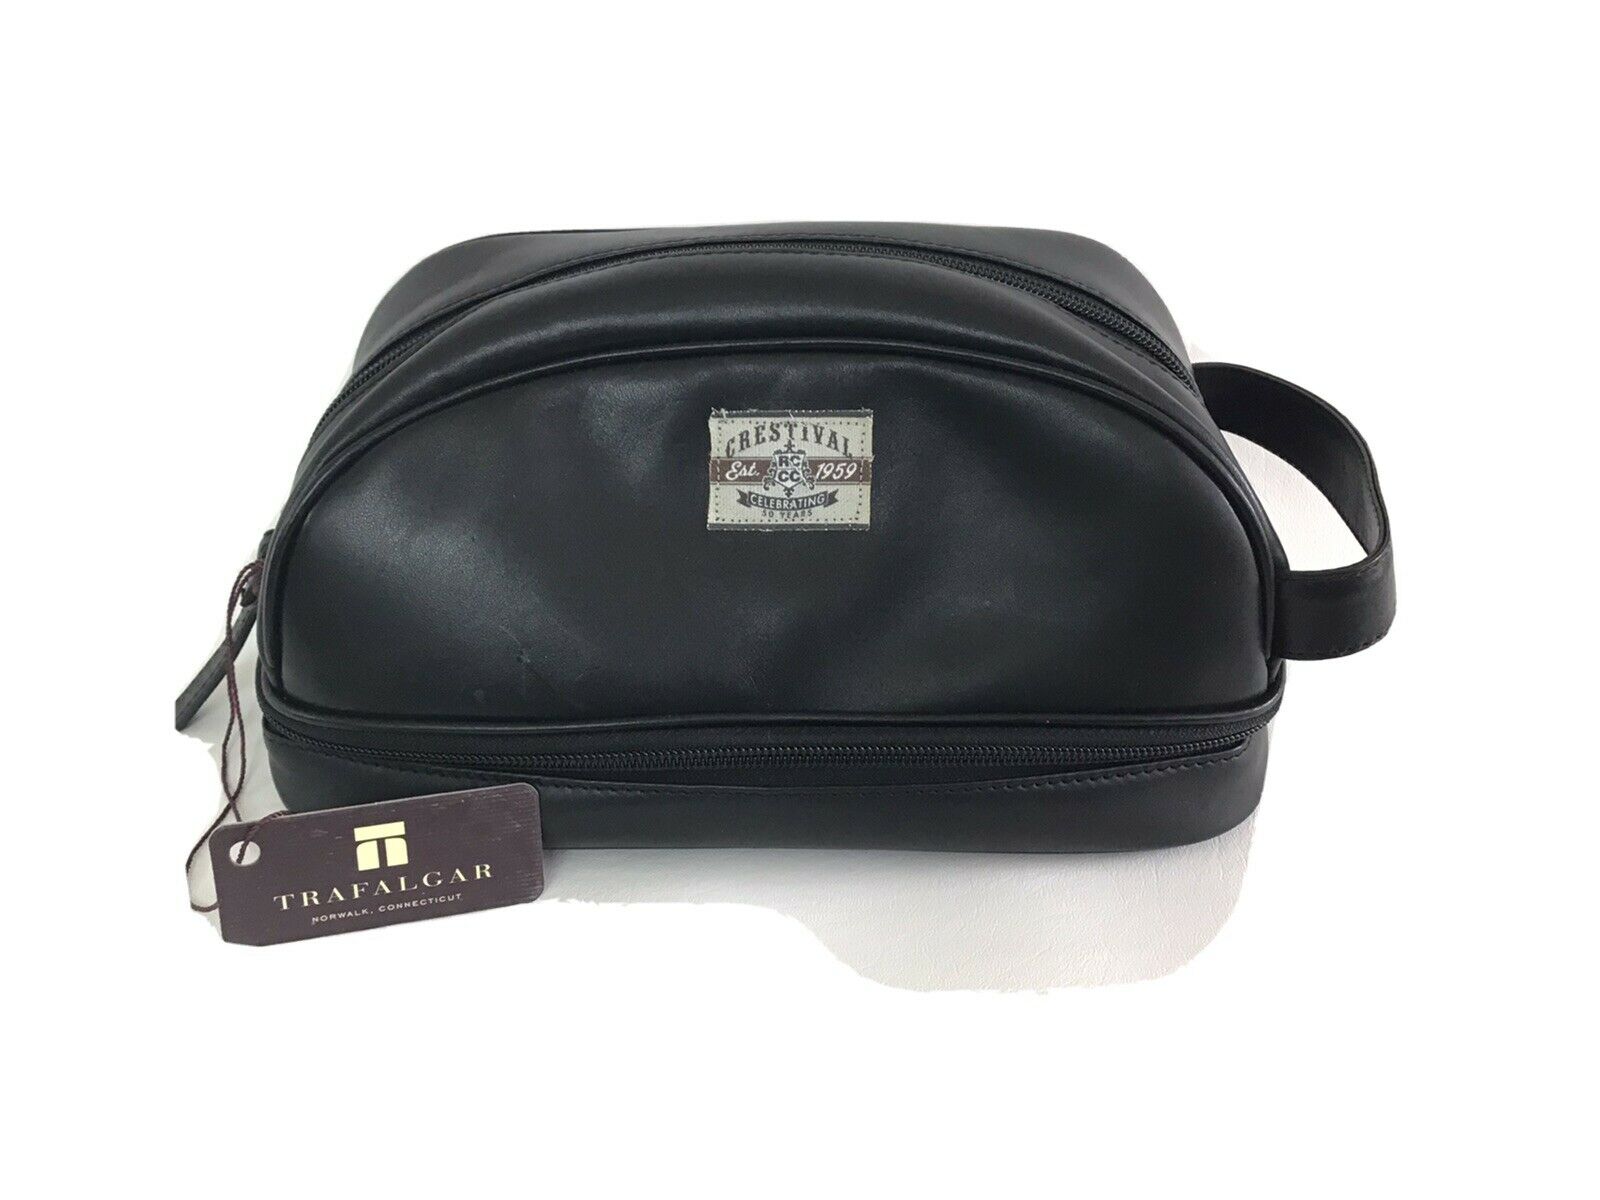 Trafalgar Black Leather Cortina Toiletry Case - New - Travel Kit $95 Retail